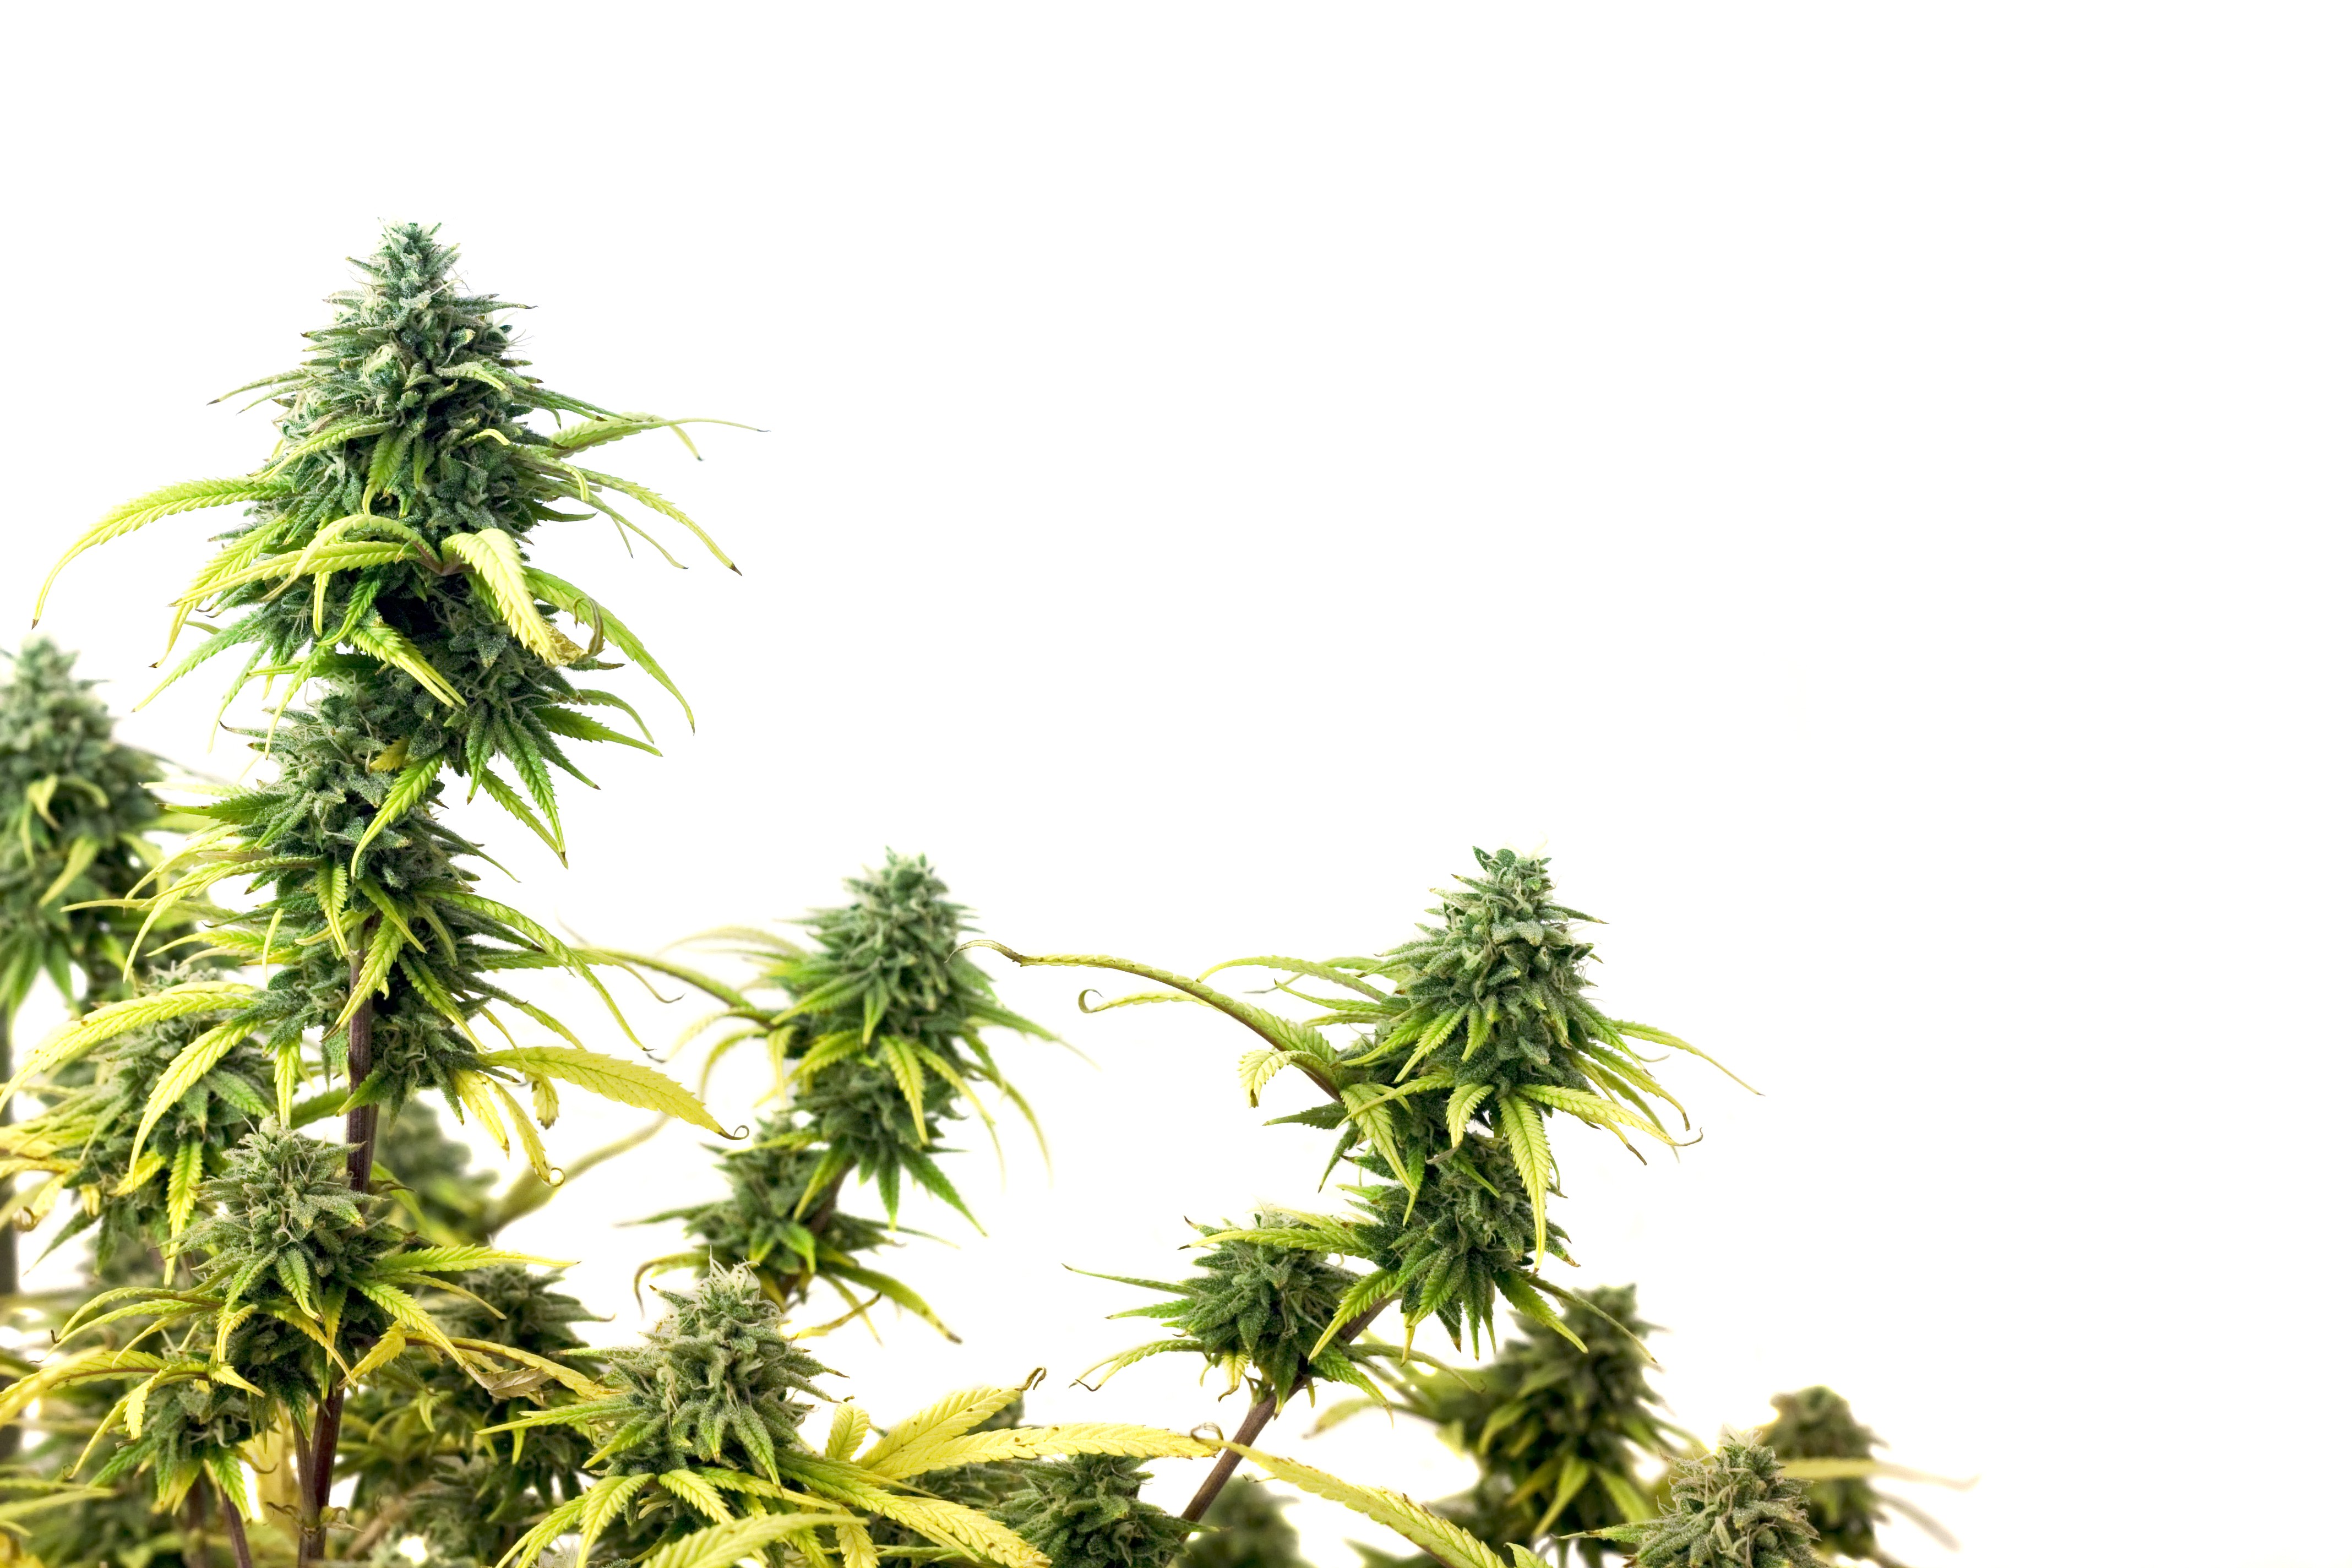 hybrid strain, mj, weed, cannabis, 